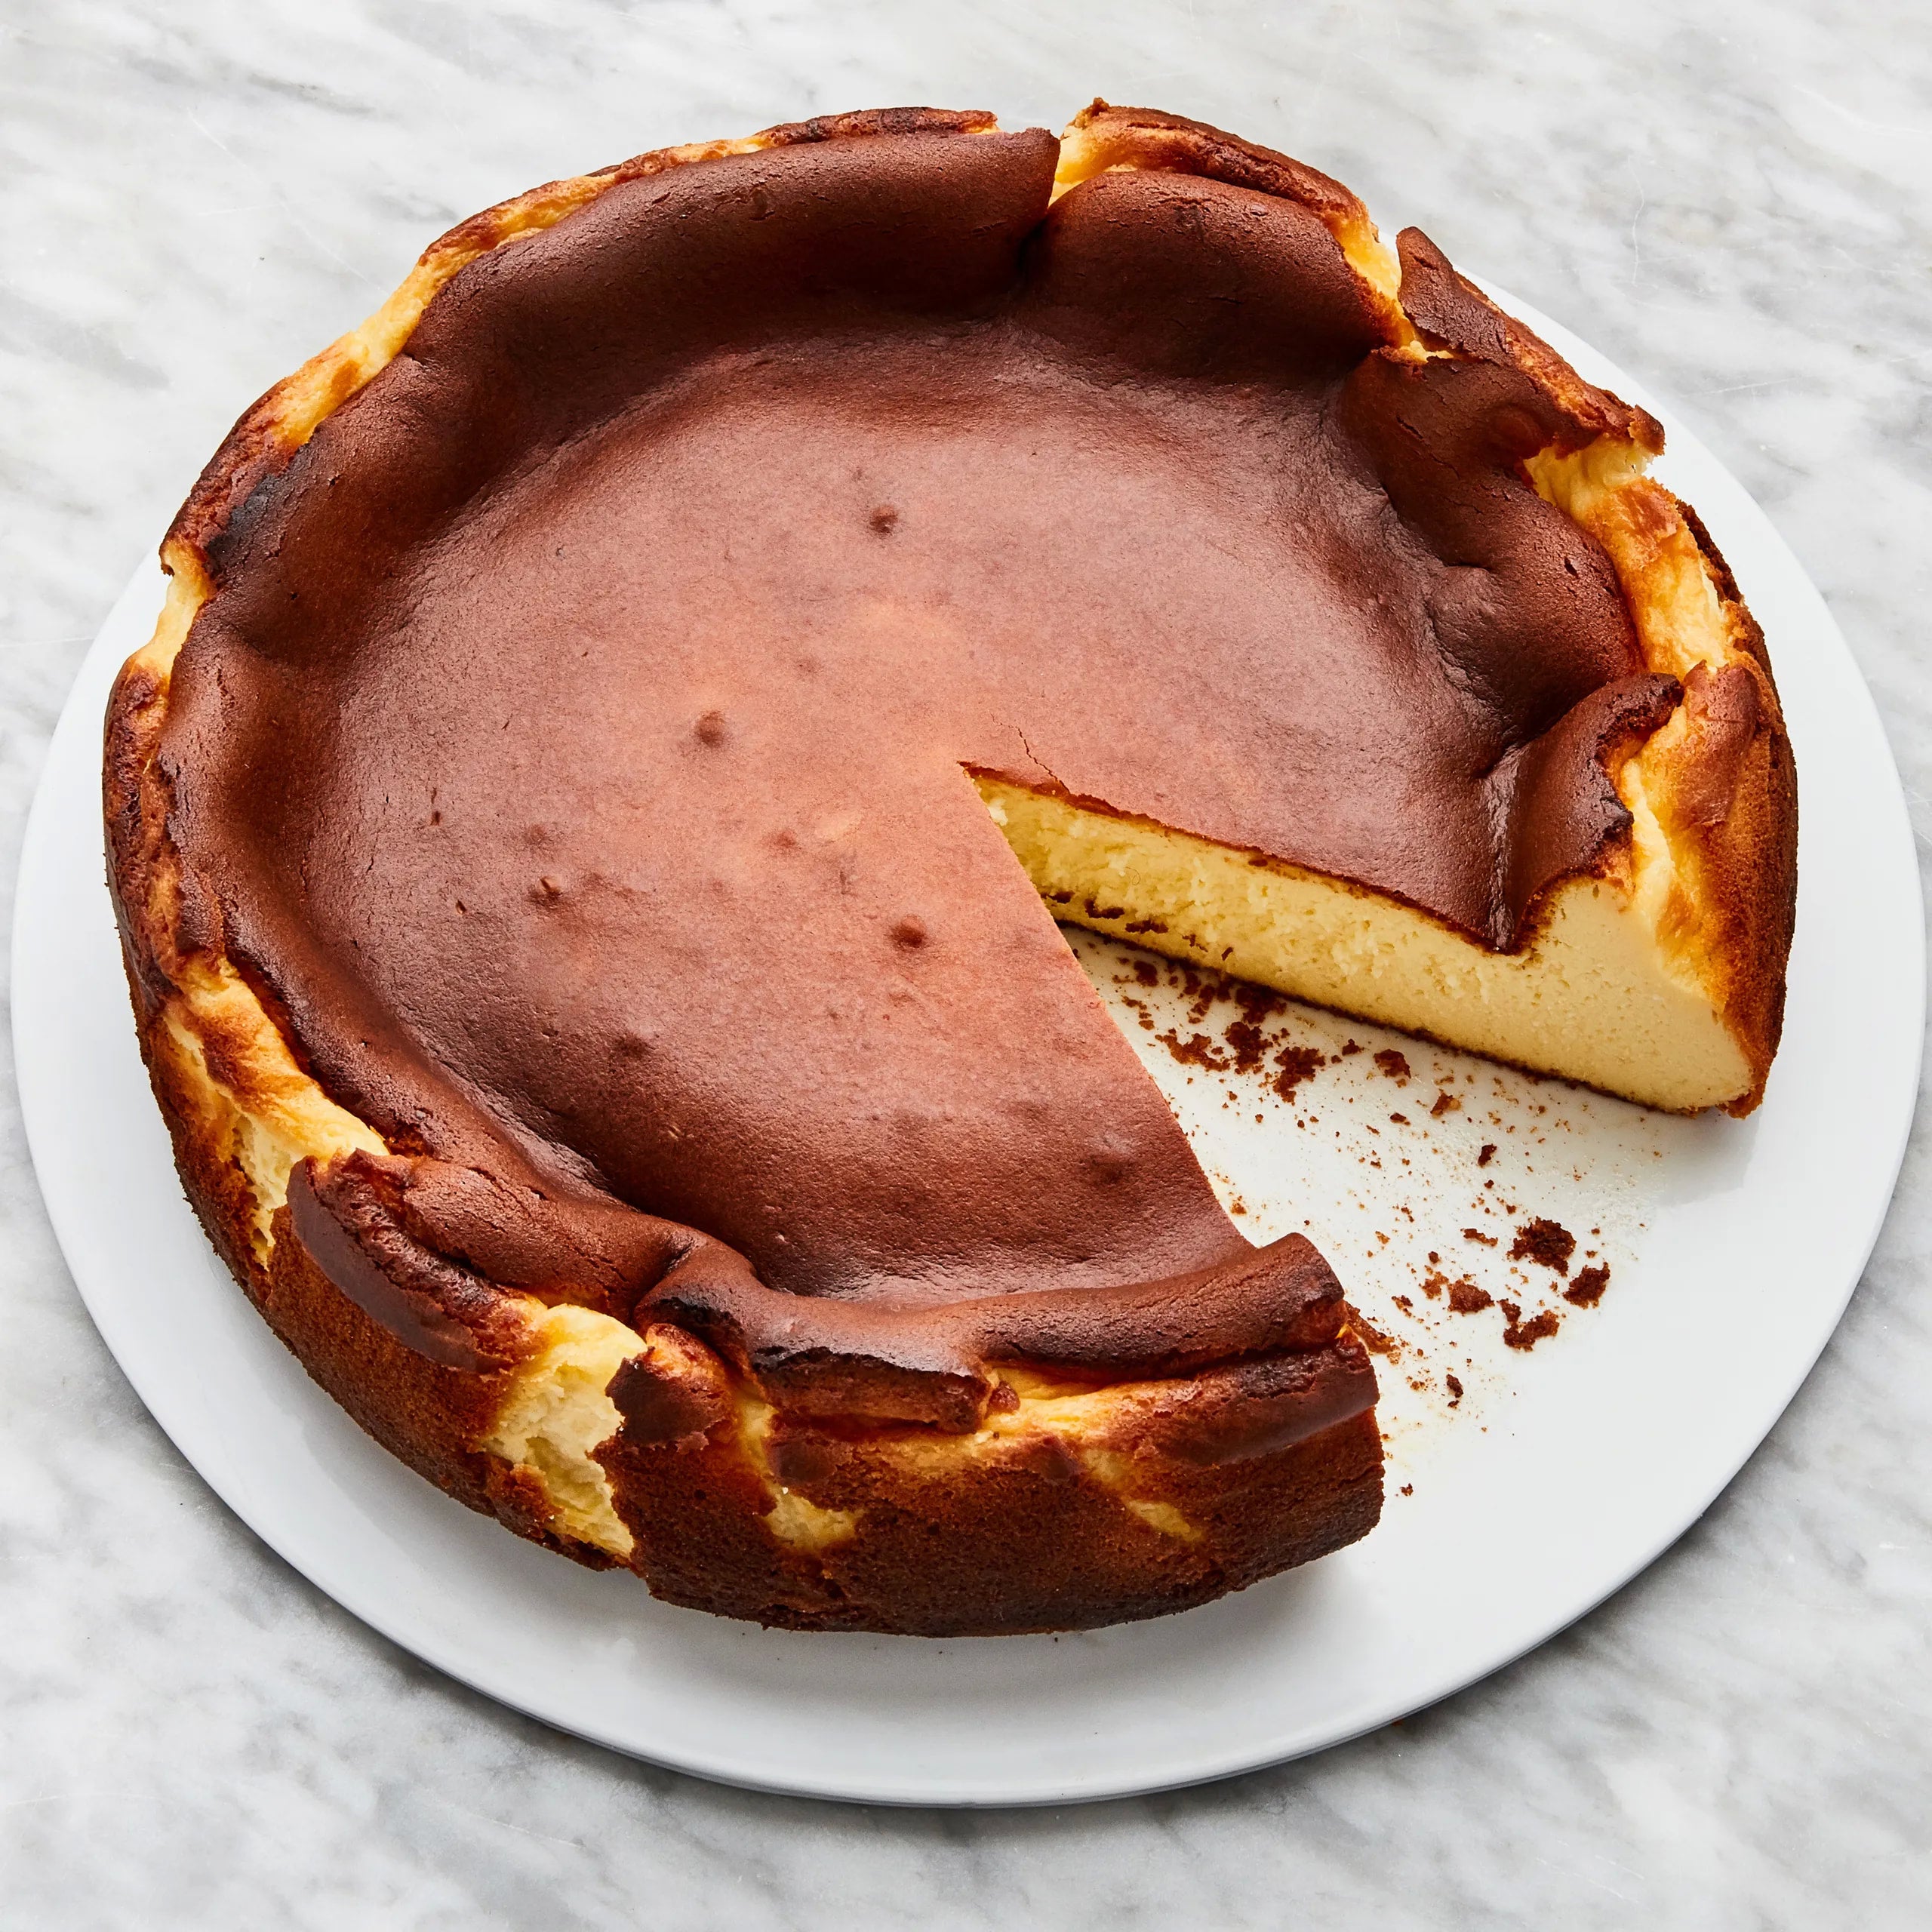 Basque cheesecake slice - original